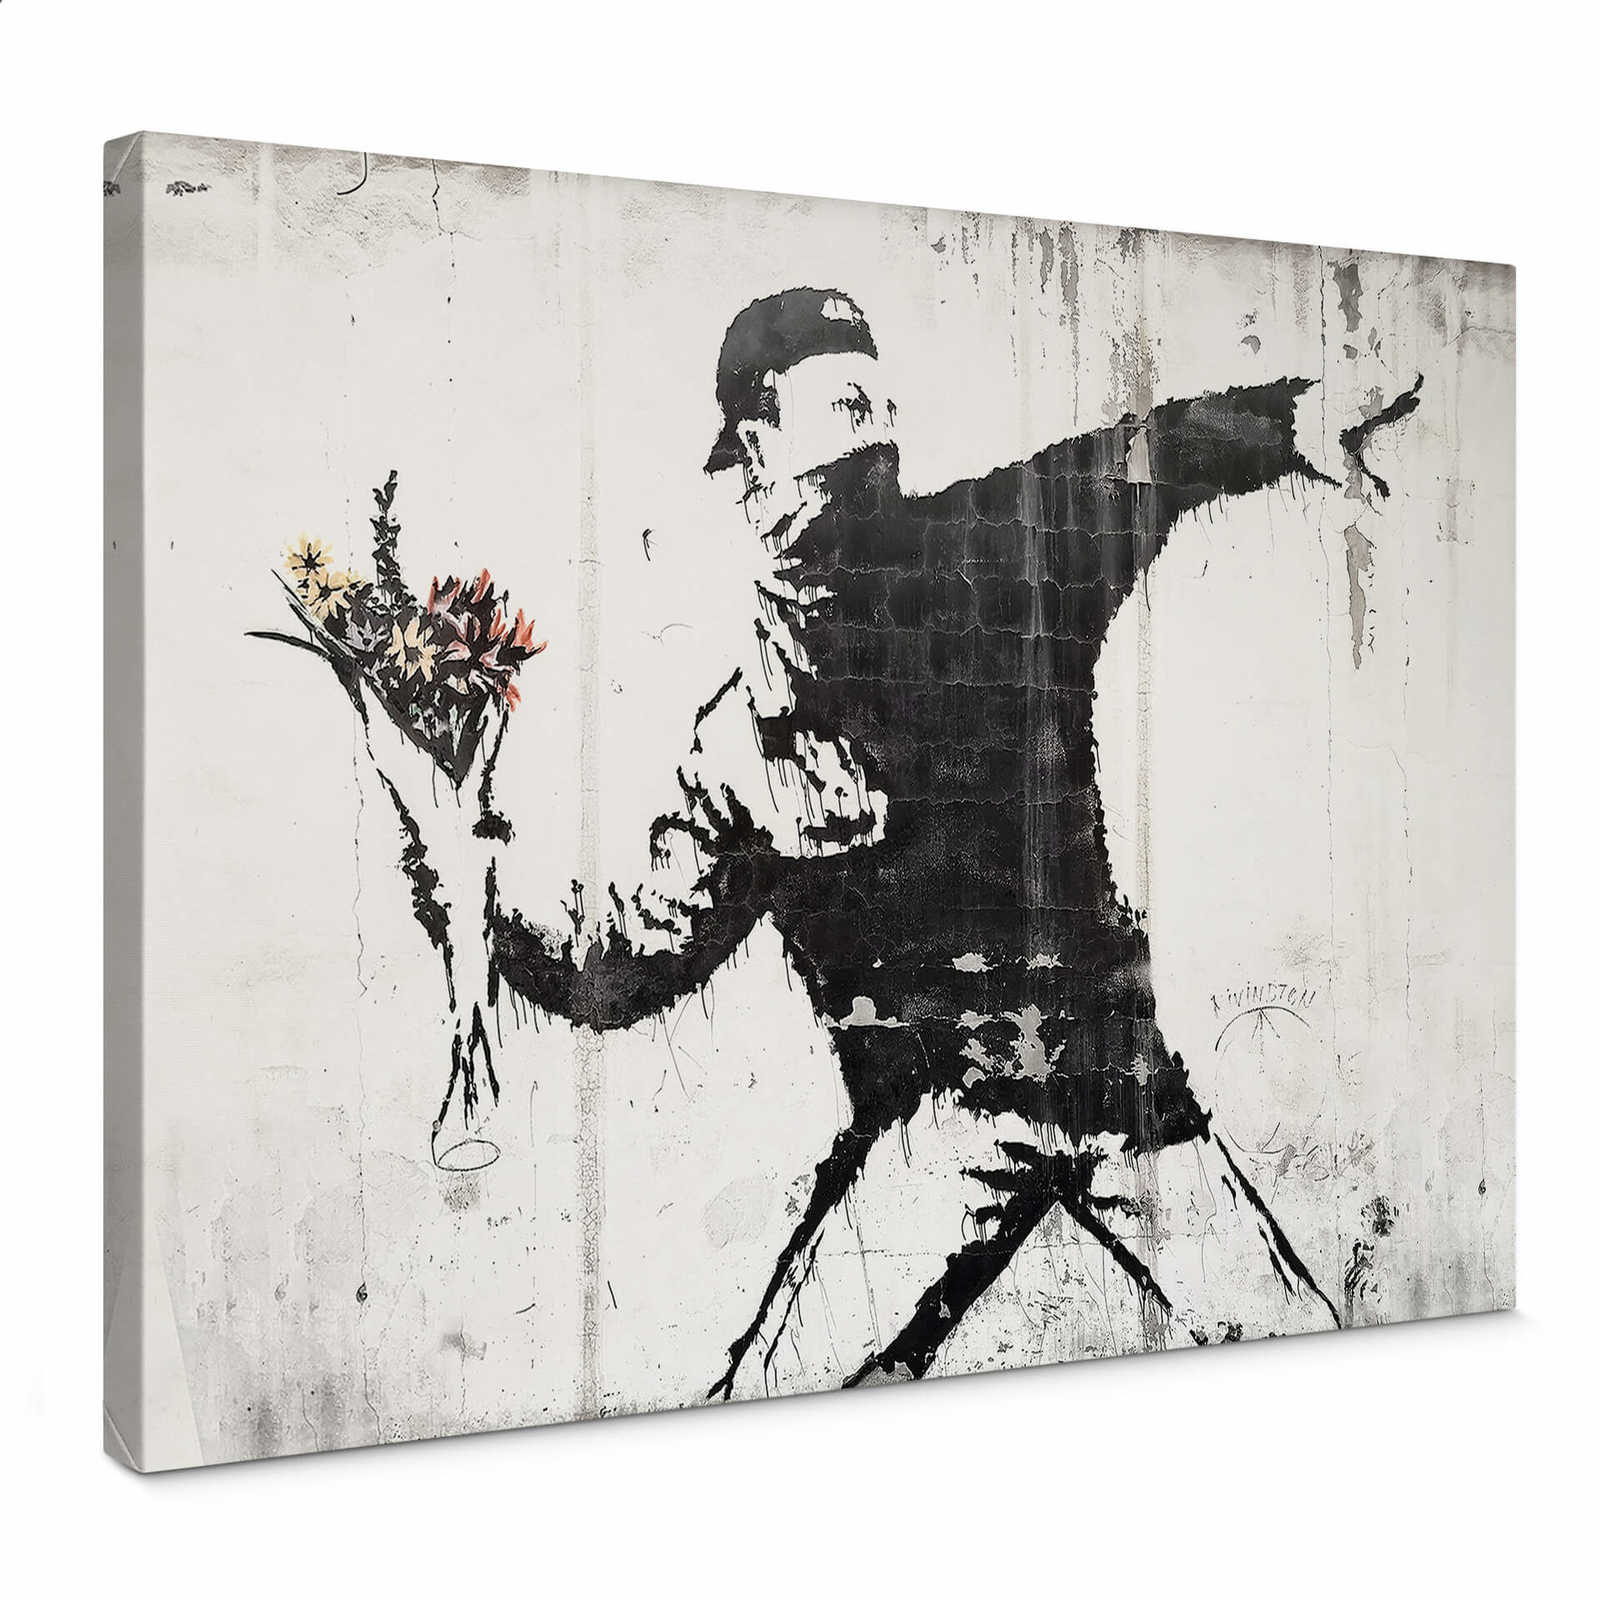         Banksy Leinwandbild "Flower Thrower" Graffiti Stil – 0,70 m x 0,50 m
    